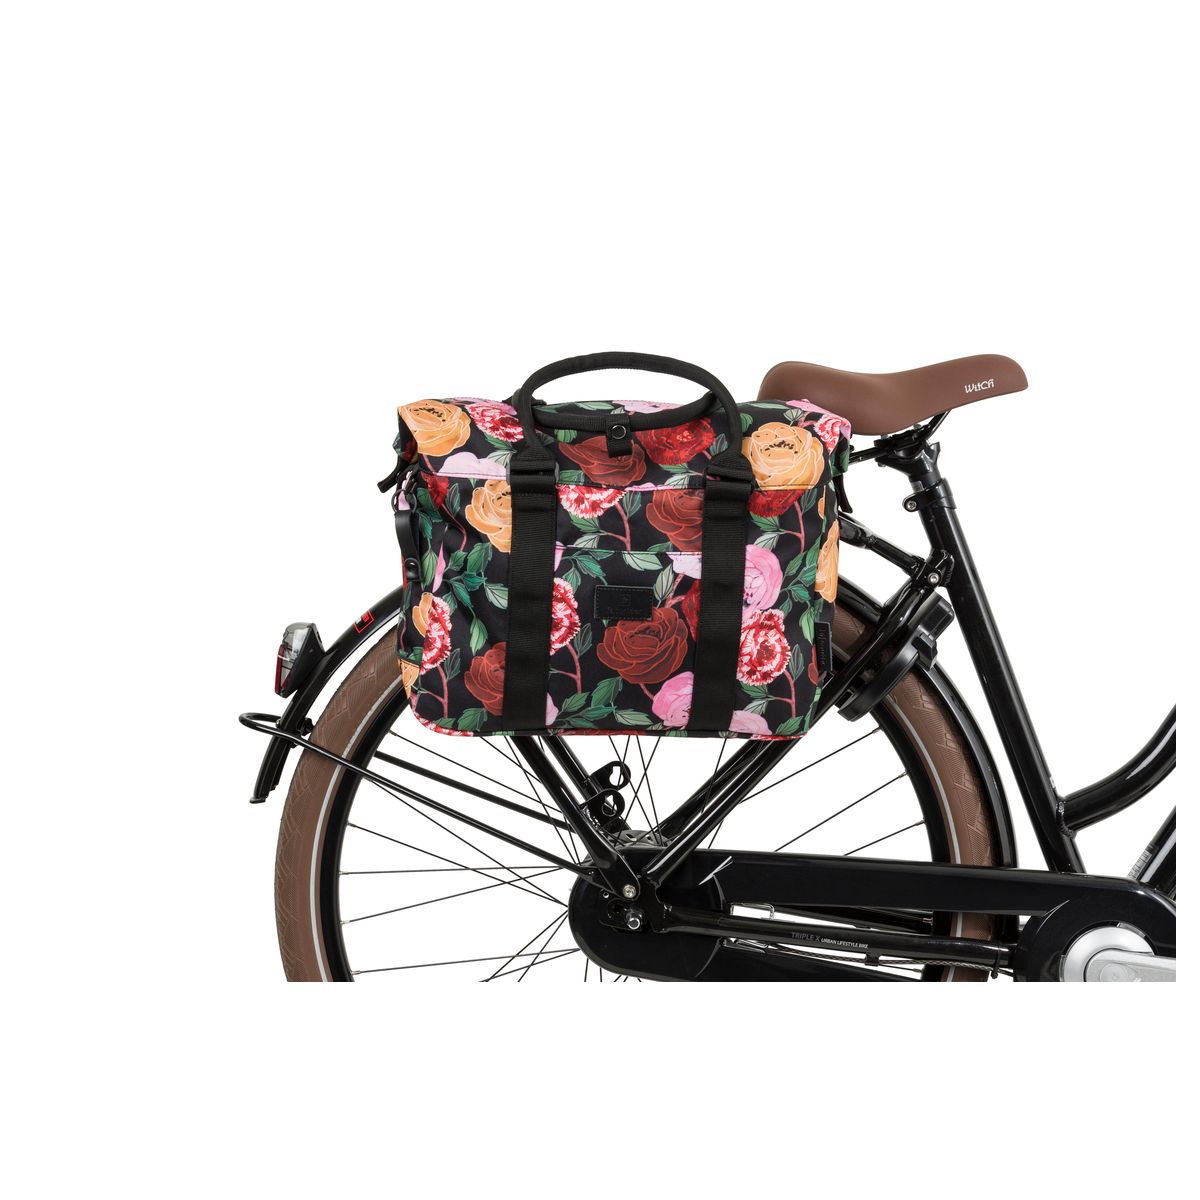 Fastrider Nyla Shopper Single Bike Bag Trend fit example